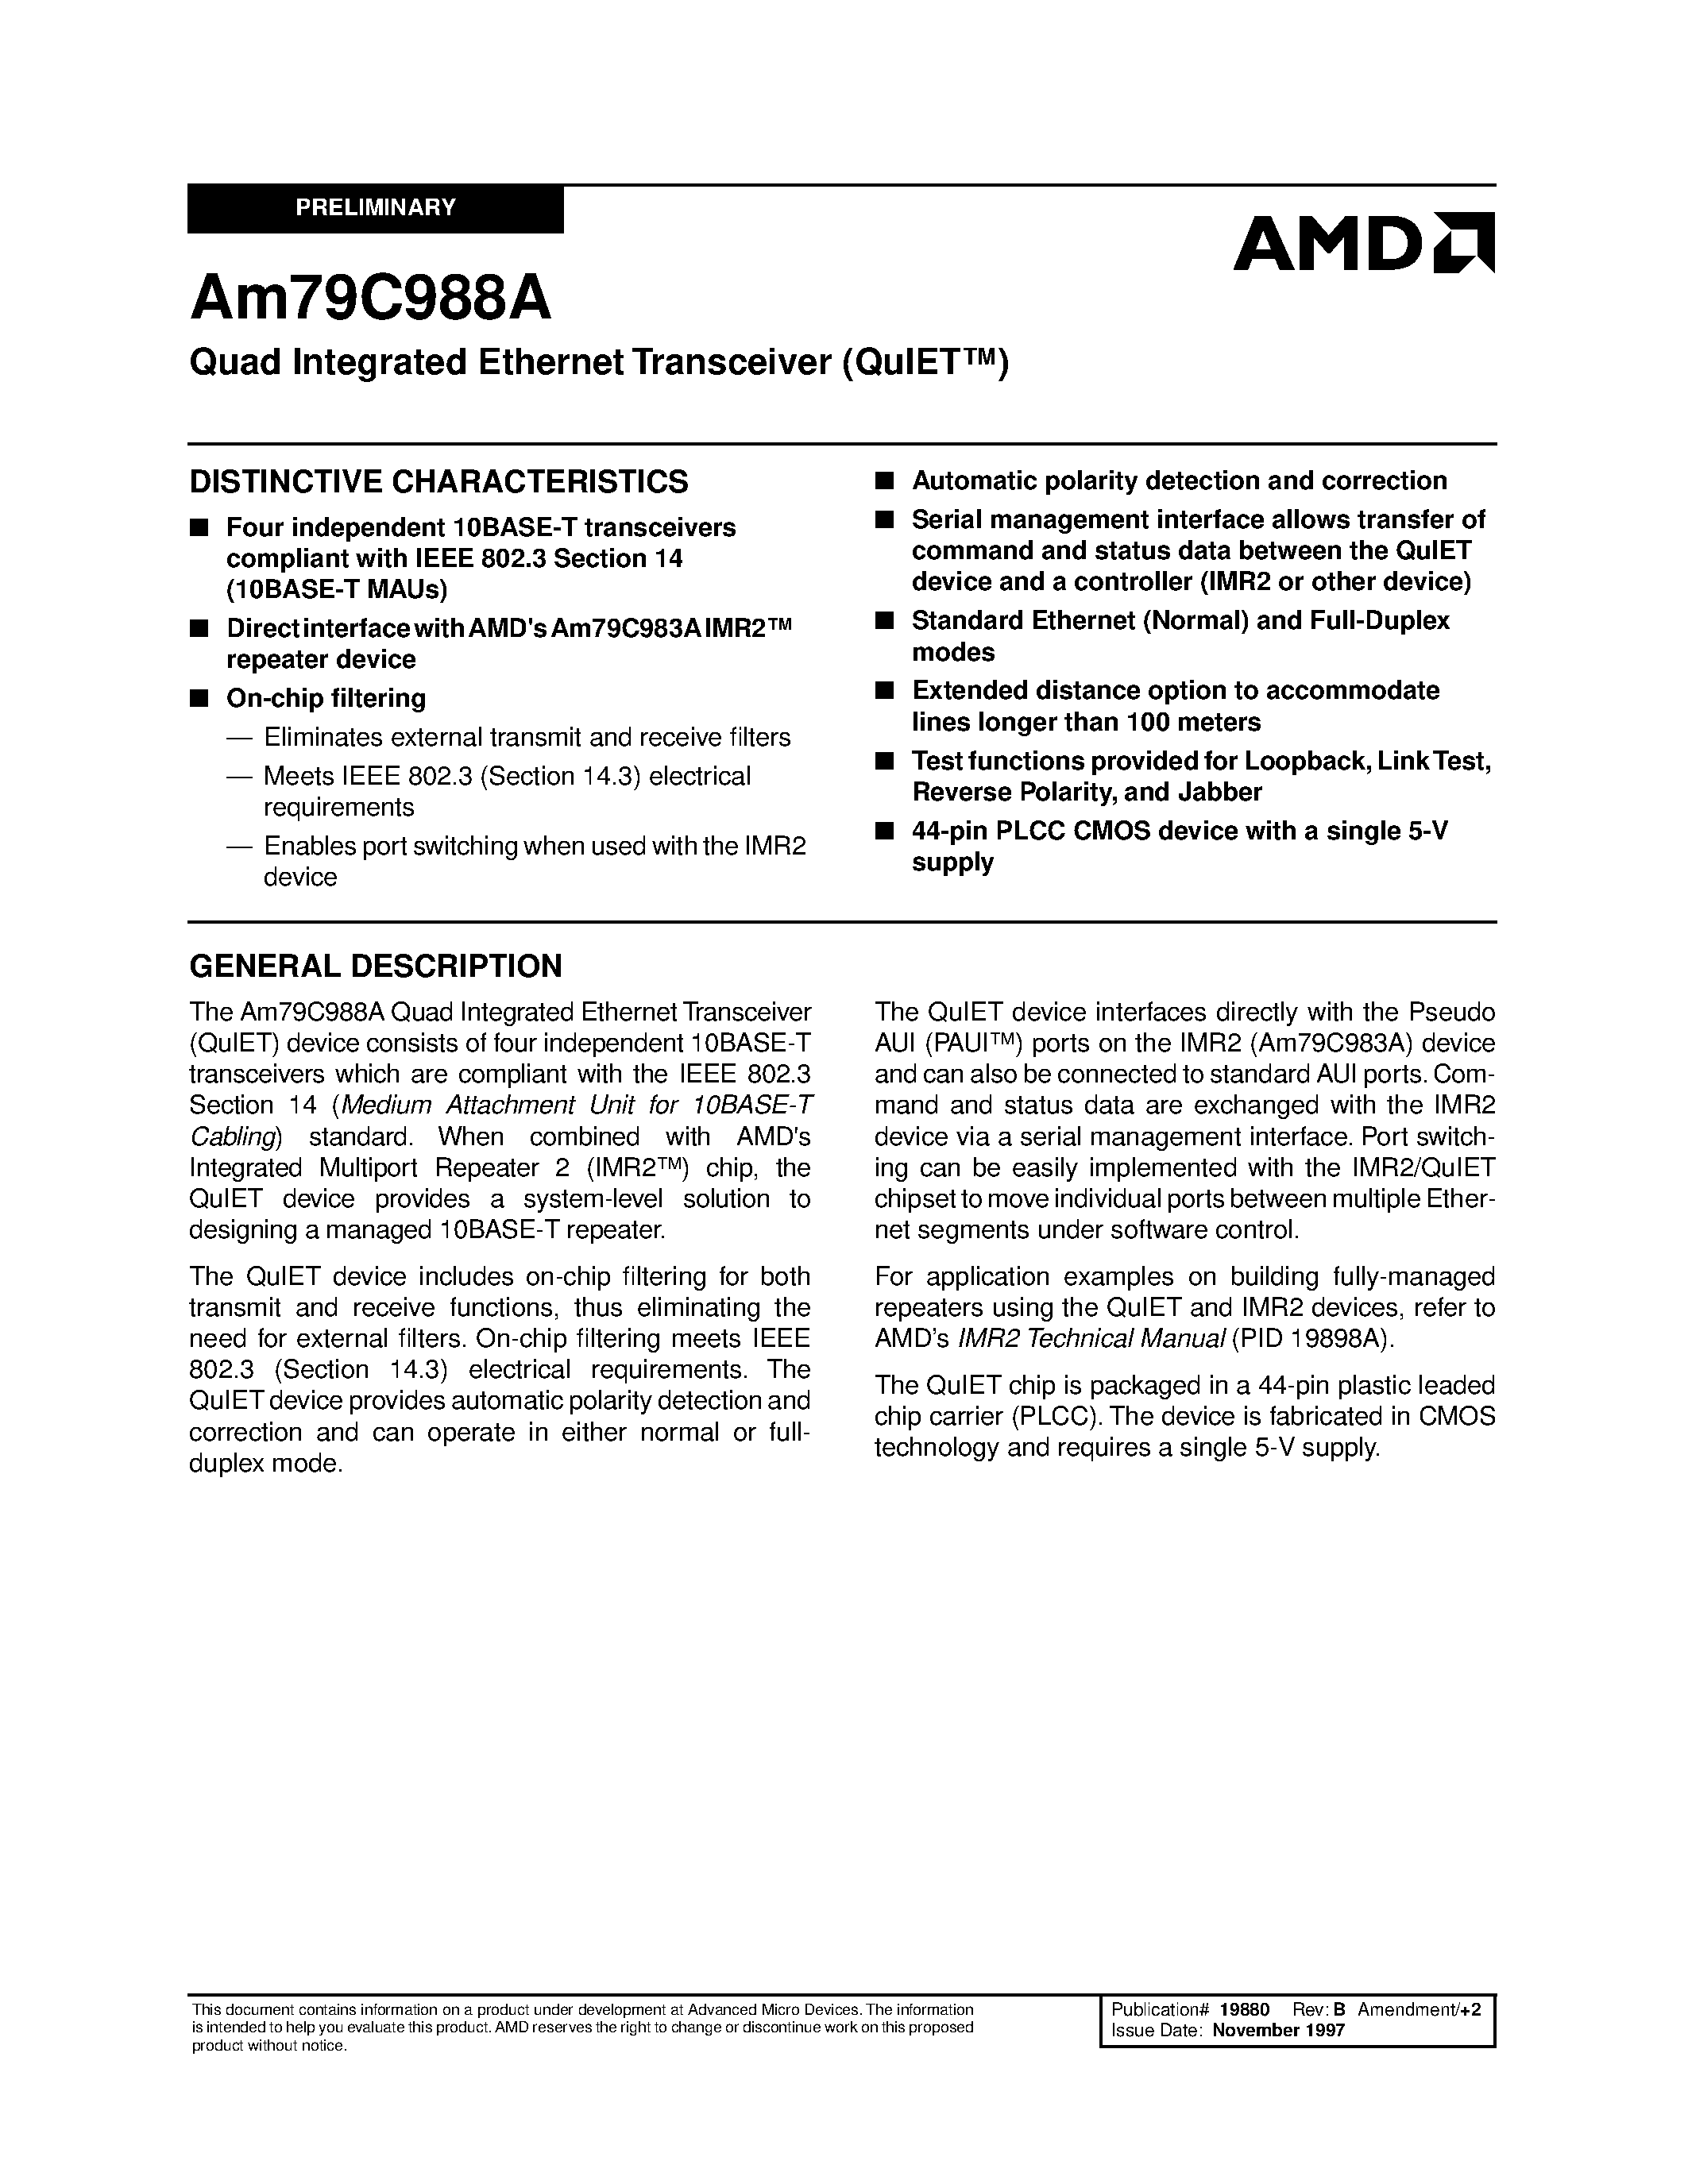 Datasheet Am79C988BJC - Quad Integrated Ethernet Transceiver (QuIET) page 1